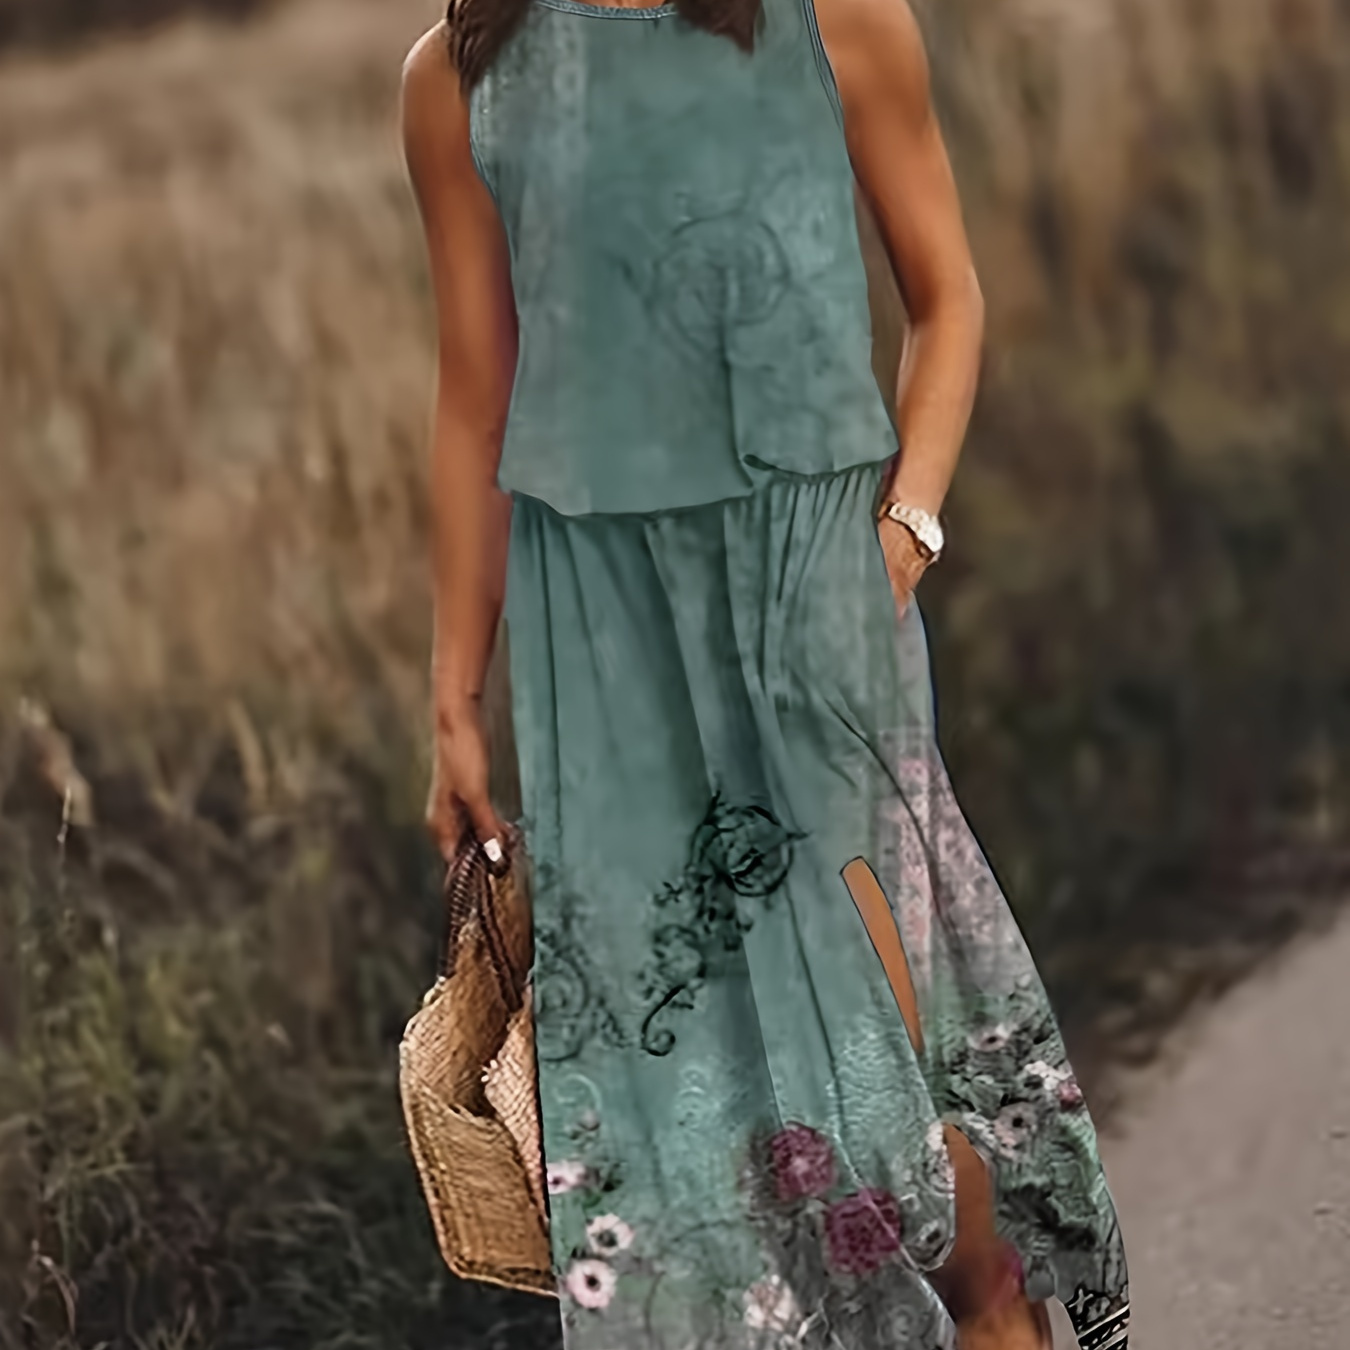 

Floral Print Split Tank Dress, Vintage Sleeveless Cinched Waist Dress For Spring & Summer, Women's Clothing